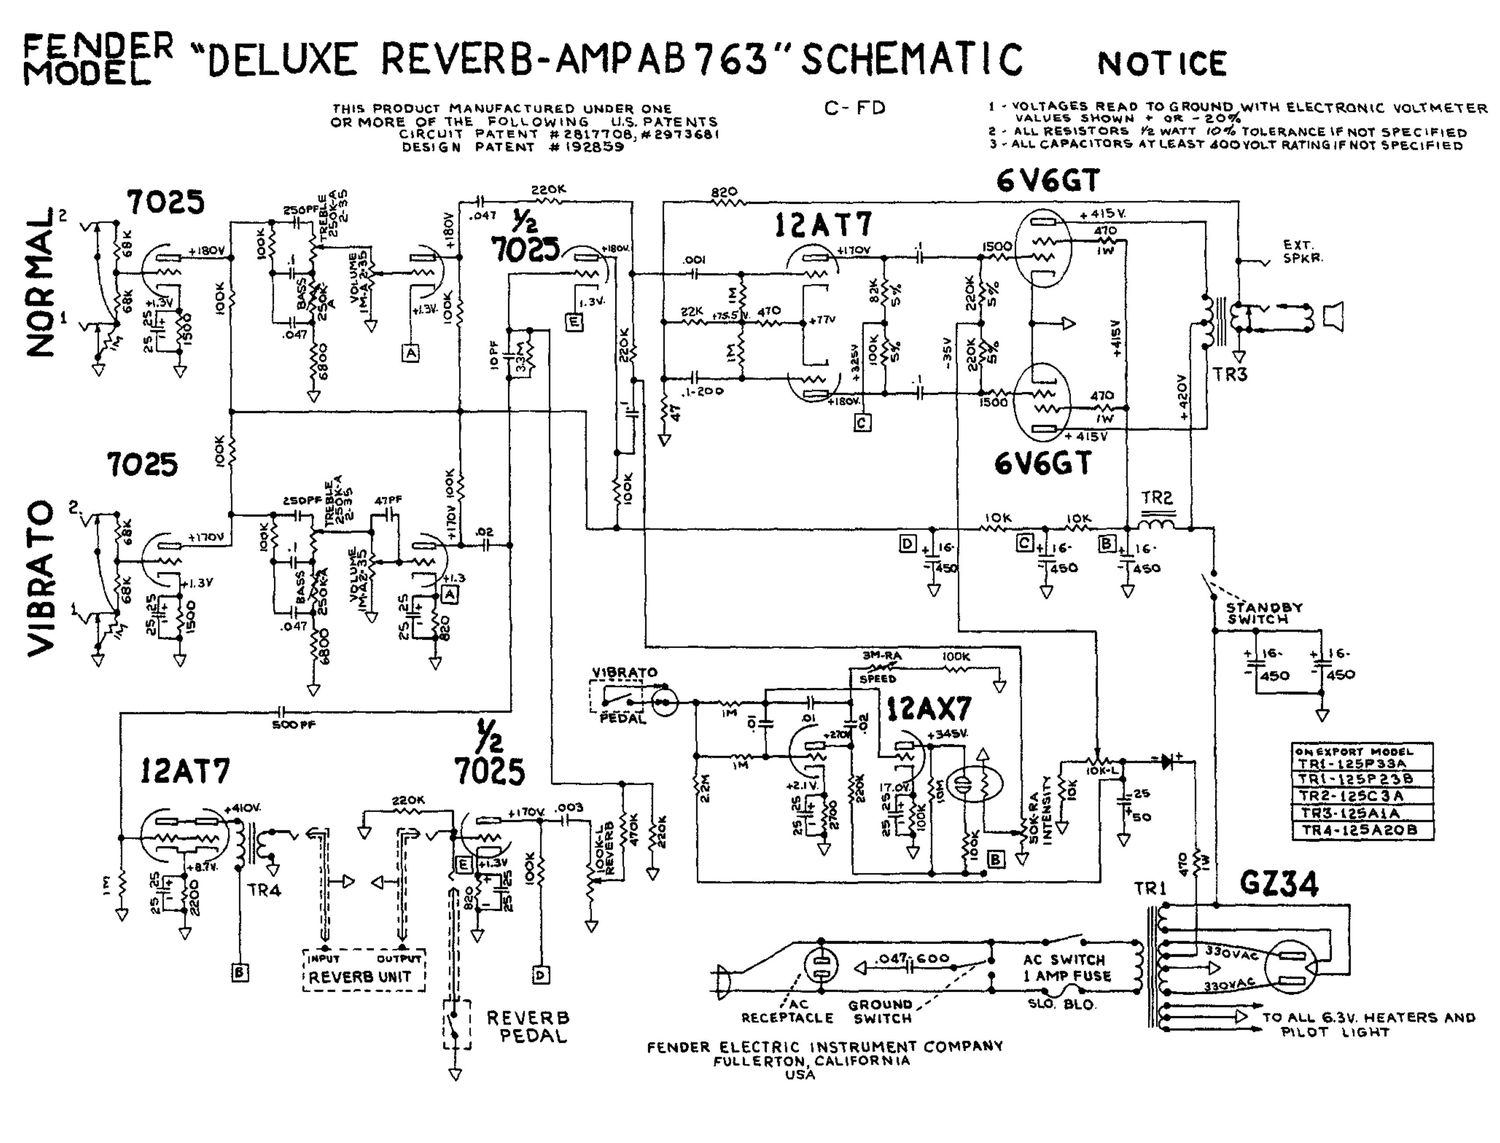 fender deluxe reverb ab763 schematic